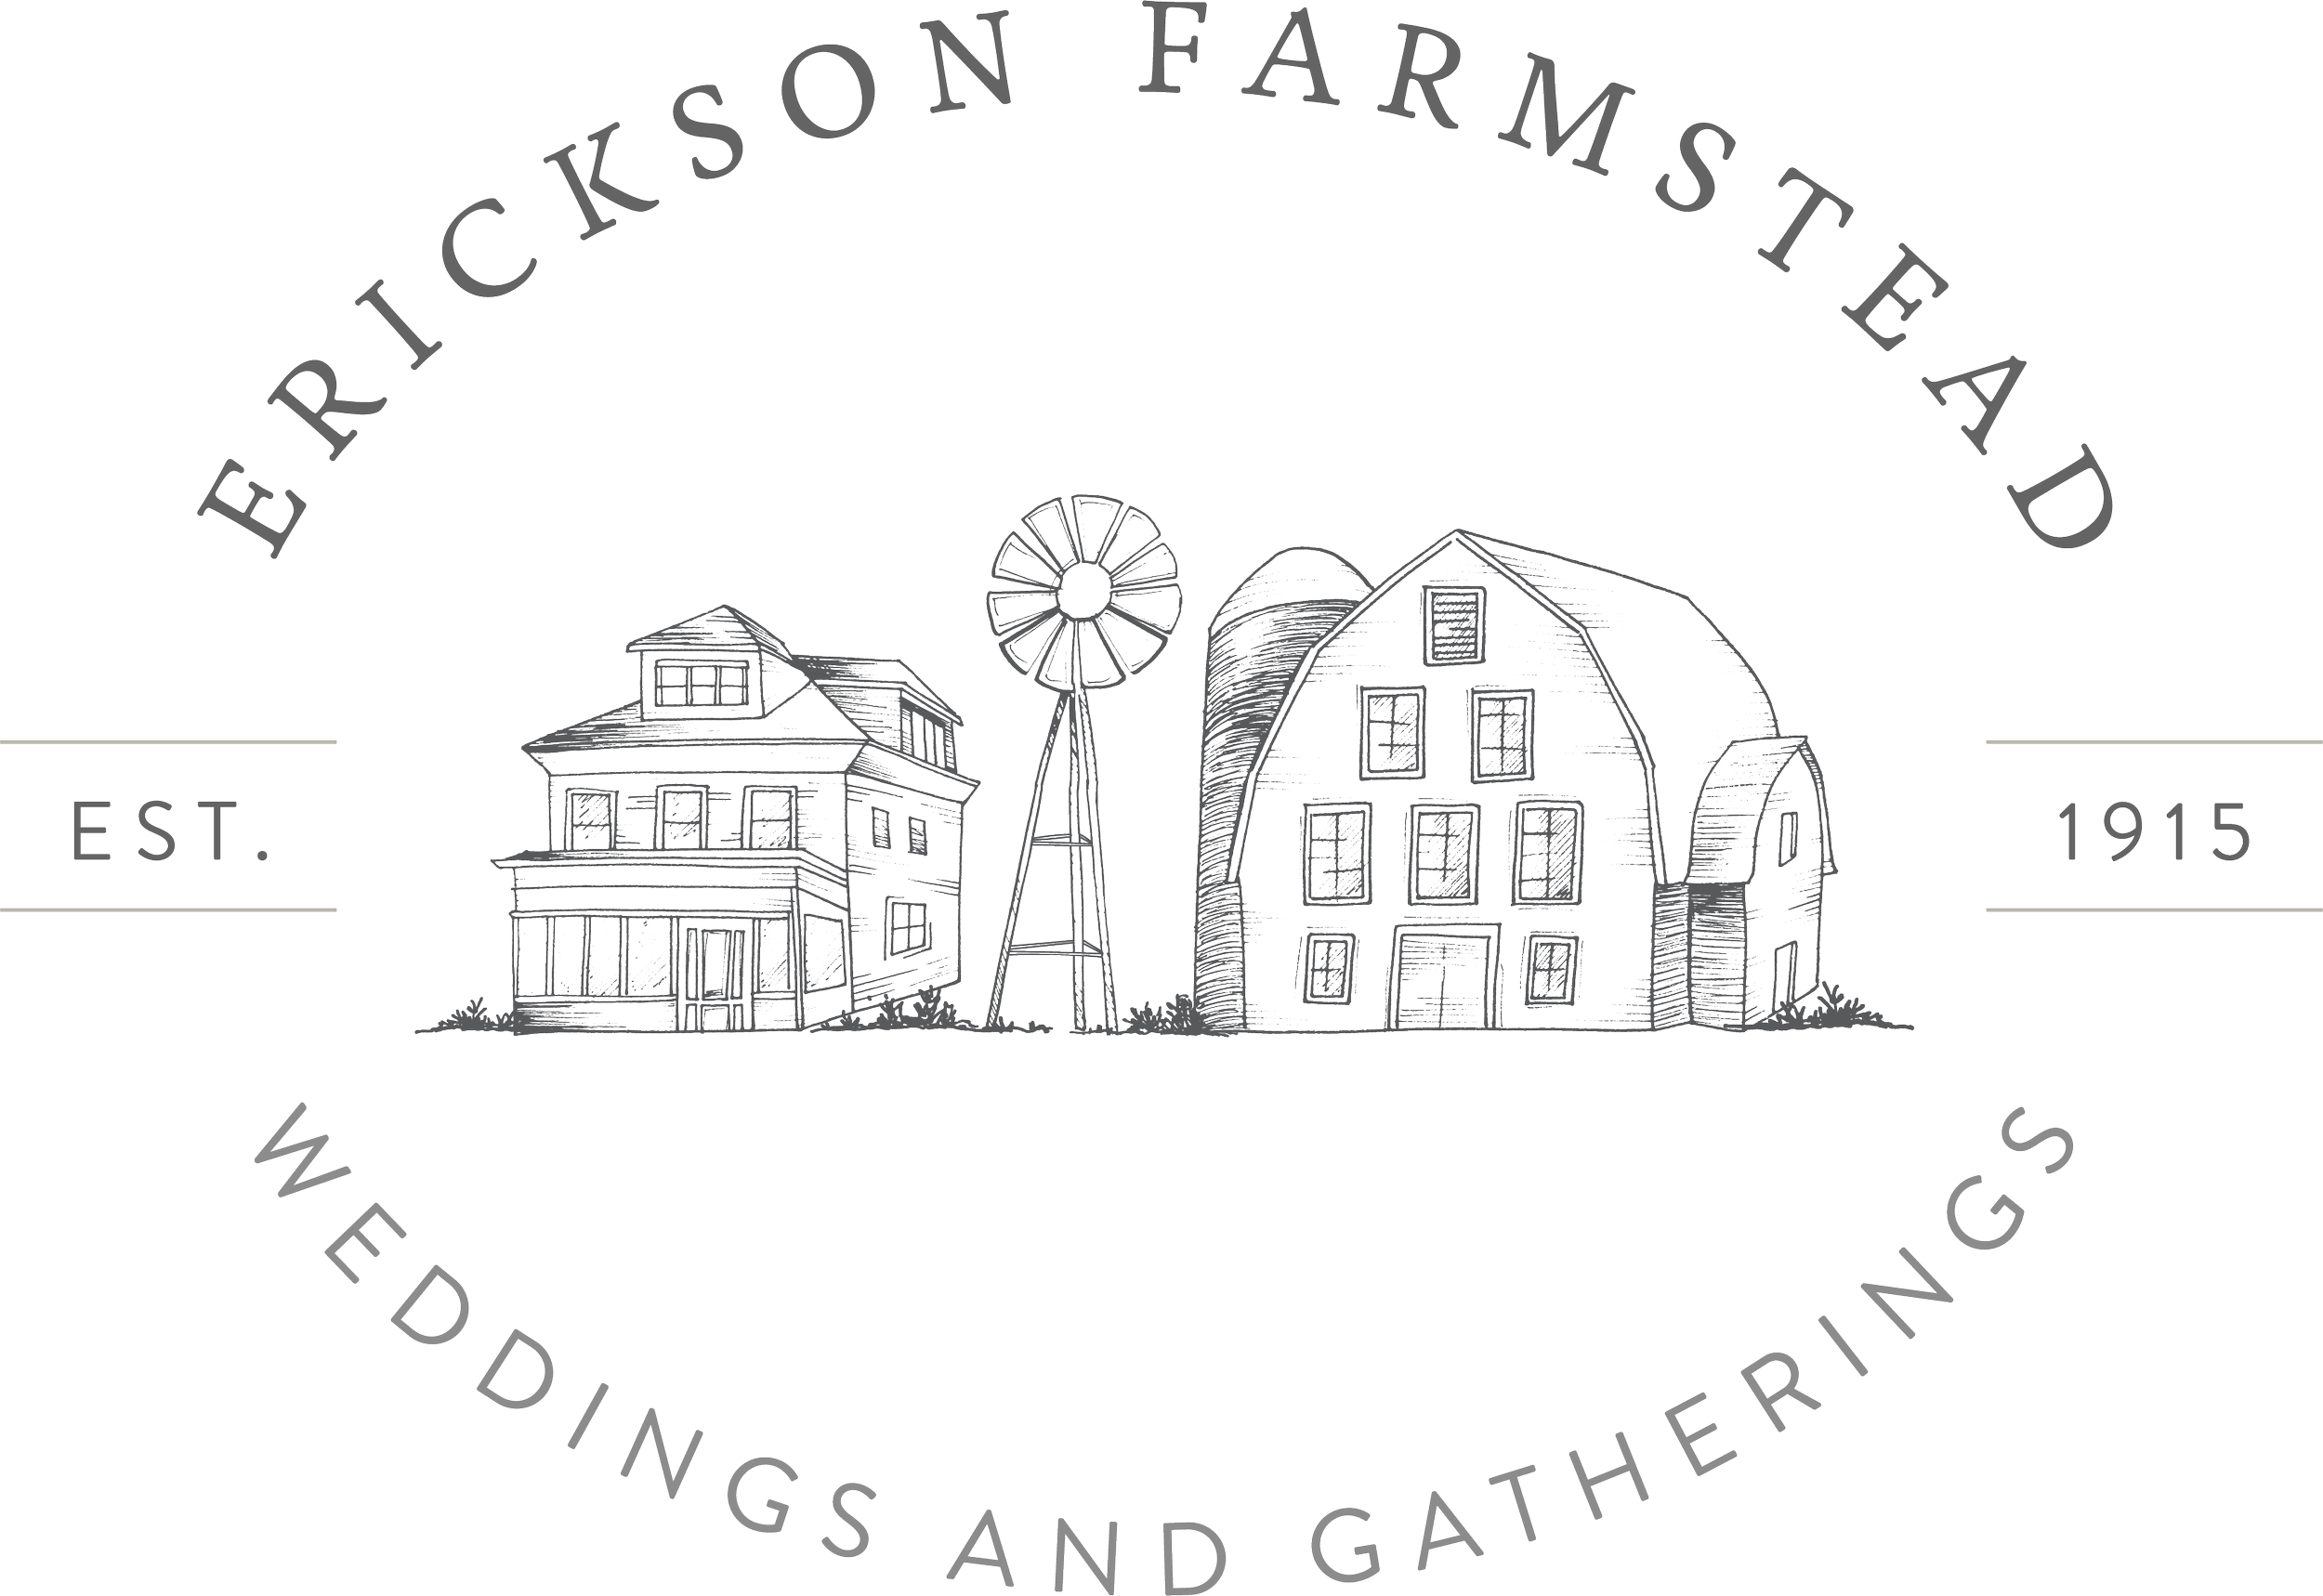 Erickson Farmstead - Revive Retreat Community Partner